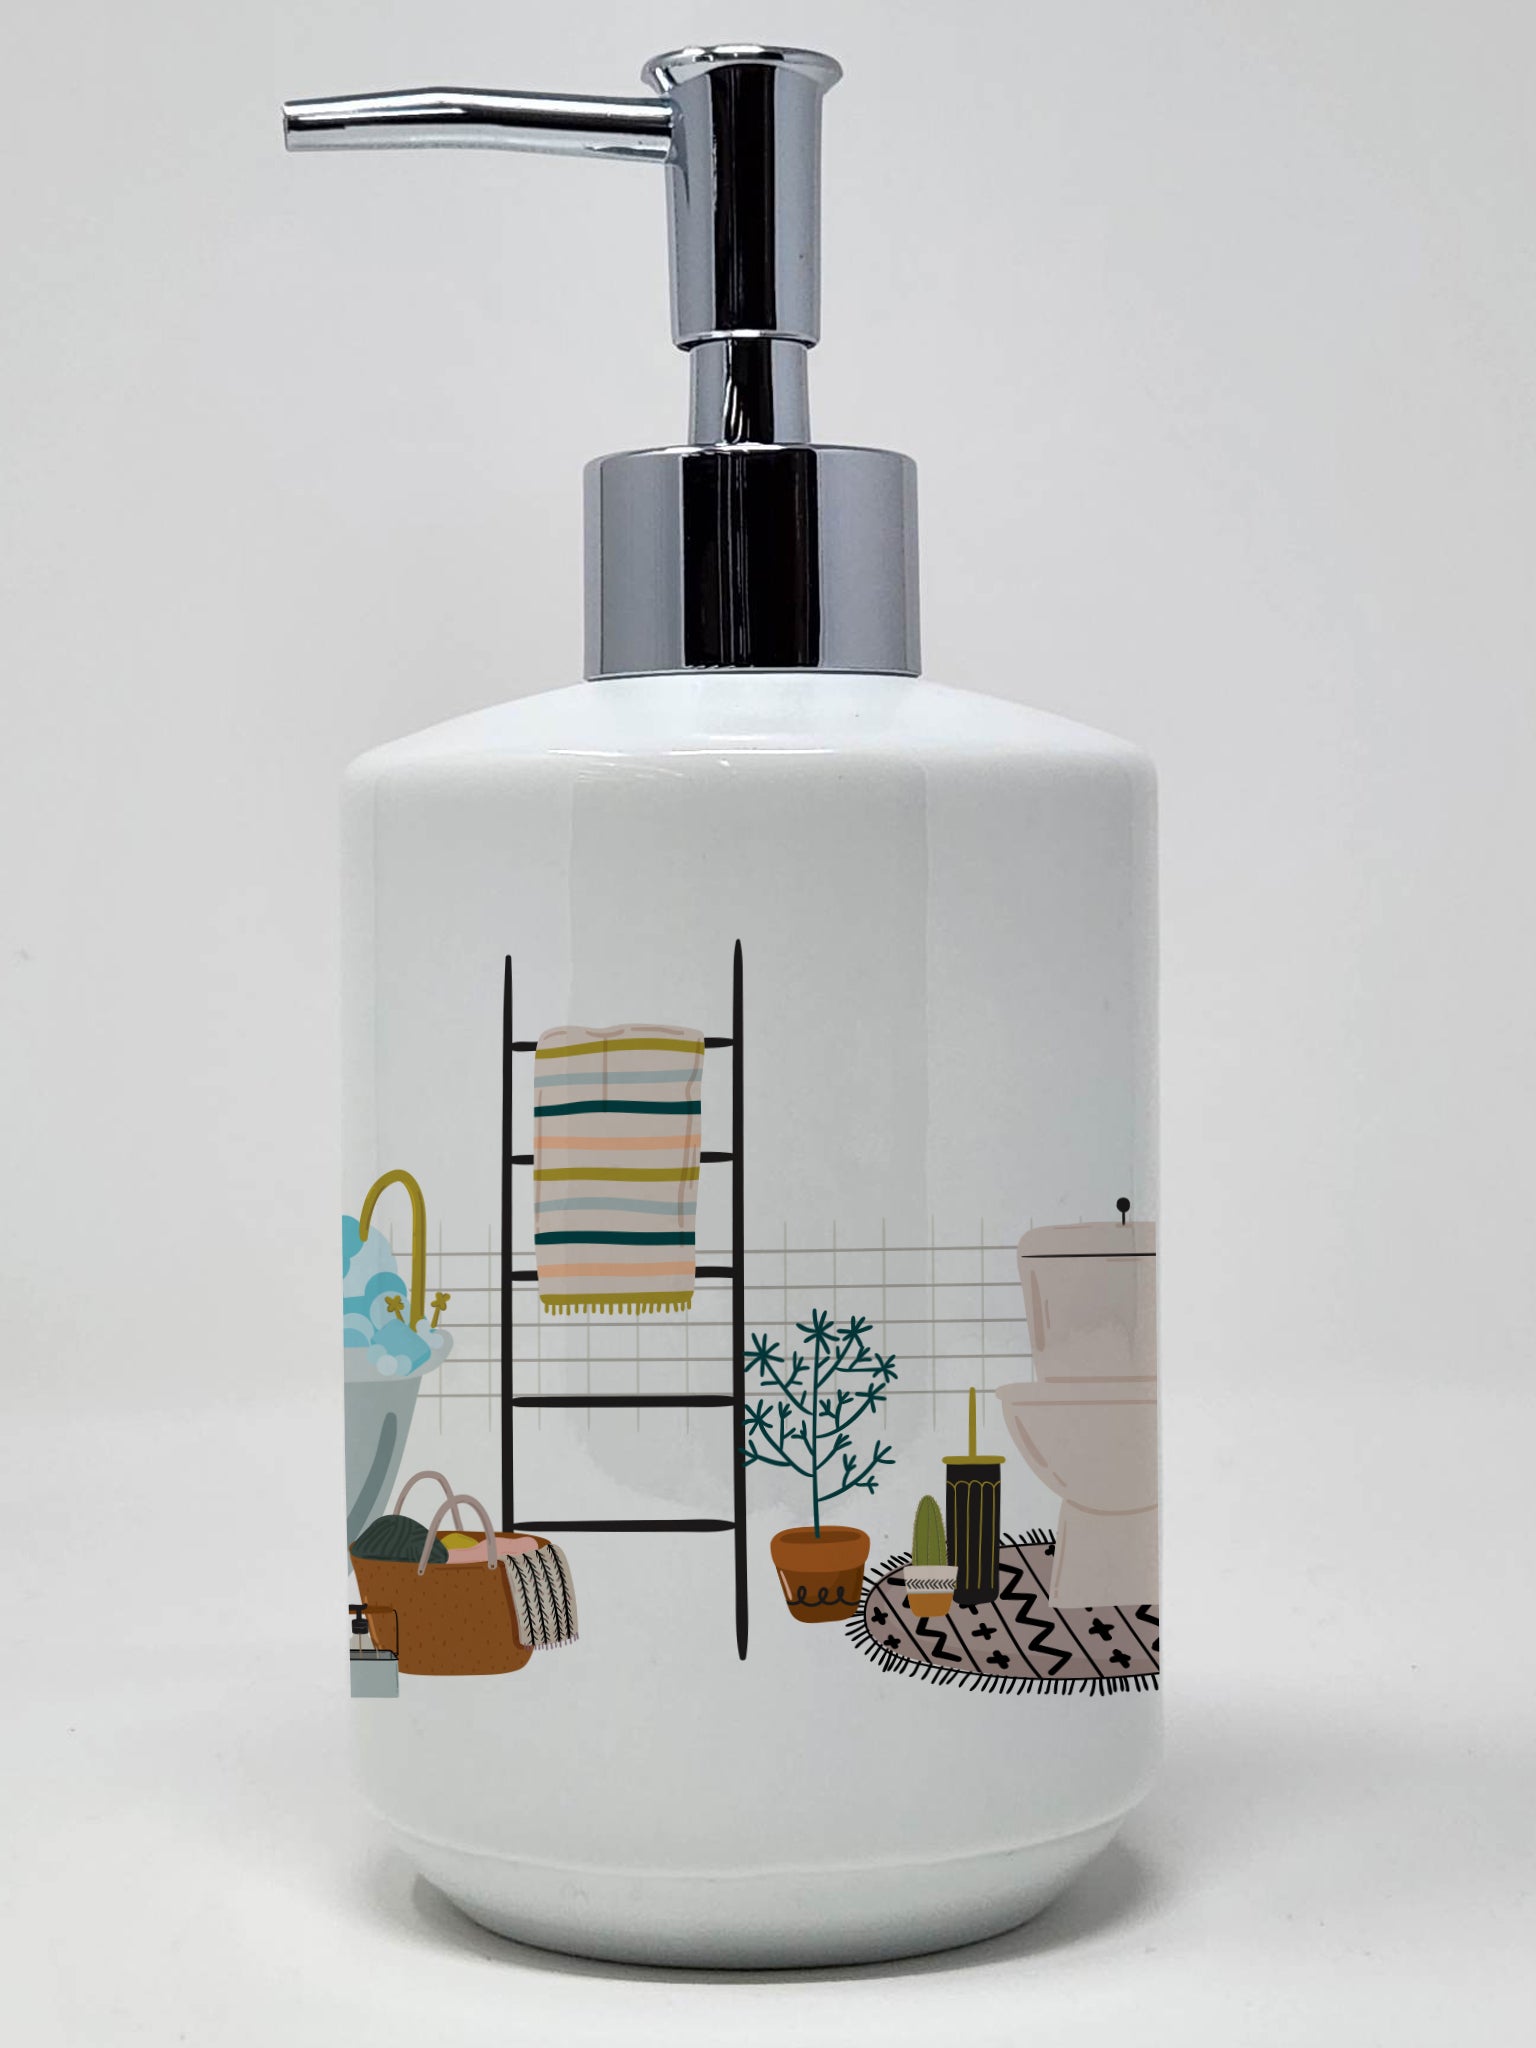 Buy this White Miniature Schnauzer in Bathtub Ceramic Soap Dispenser